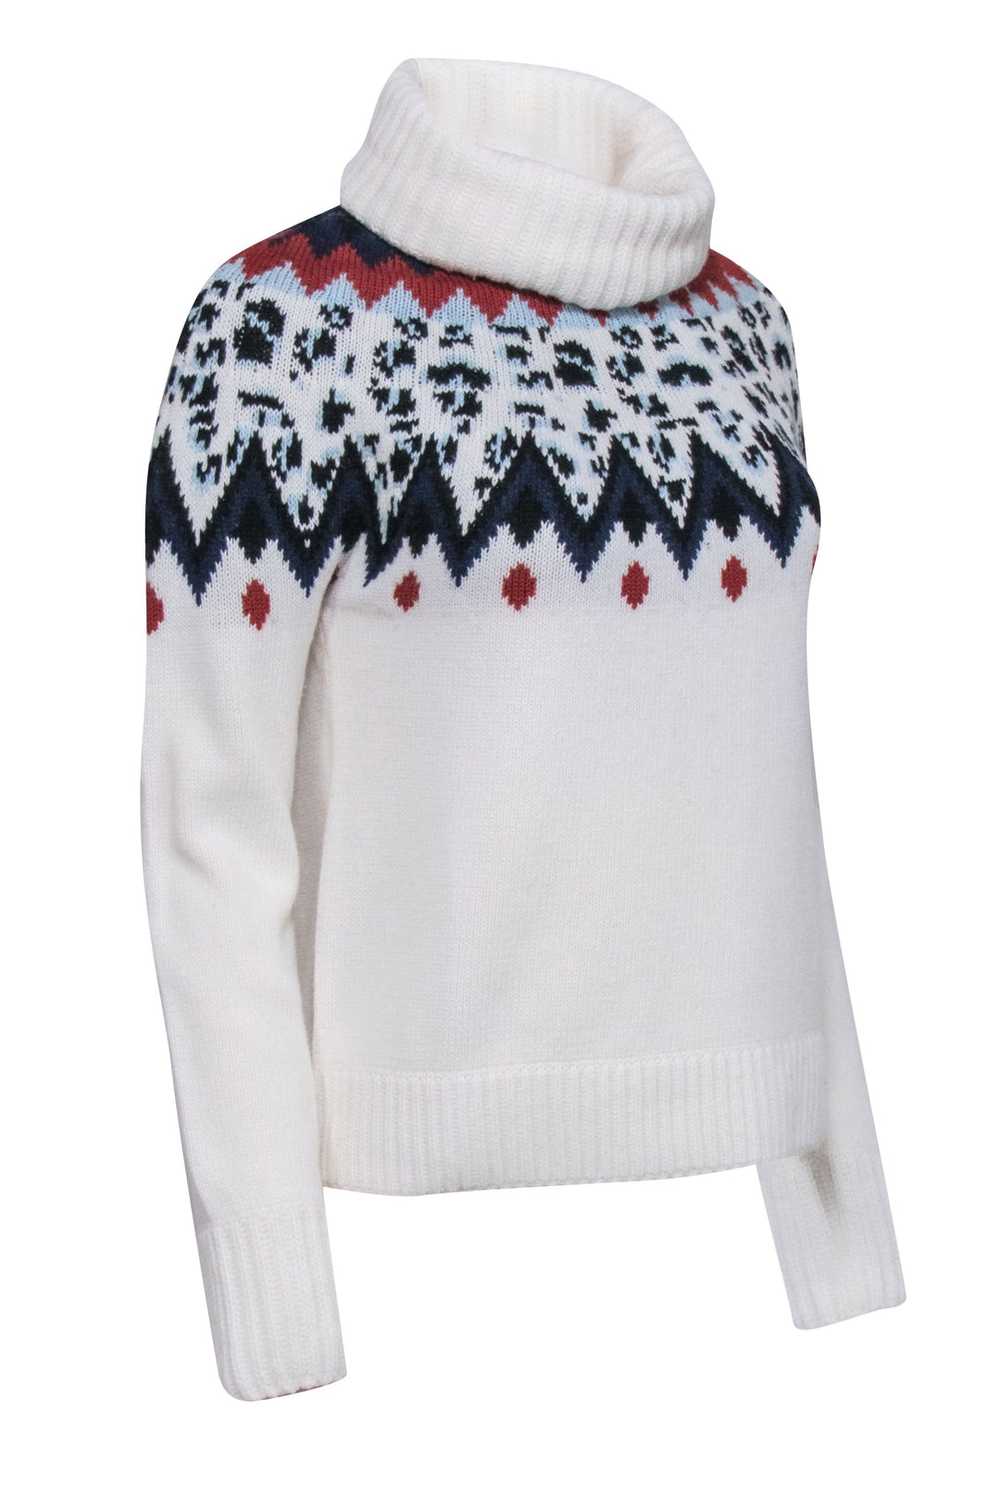 Veronica Beard - Ivory Turtleneck Sweater Sz M - image 2